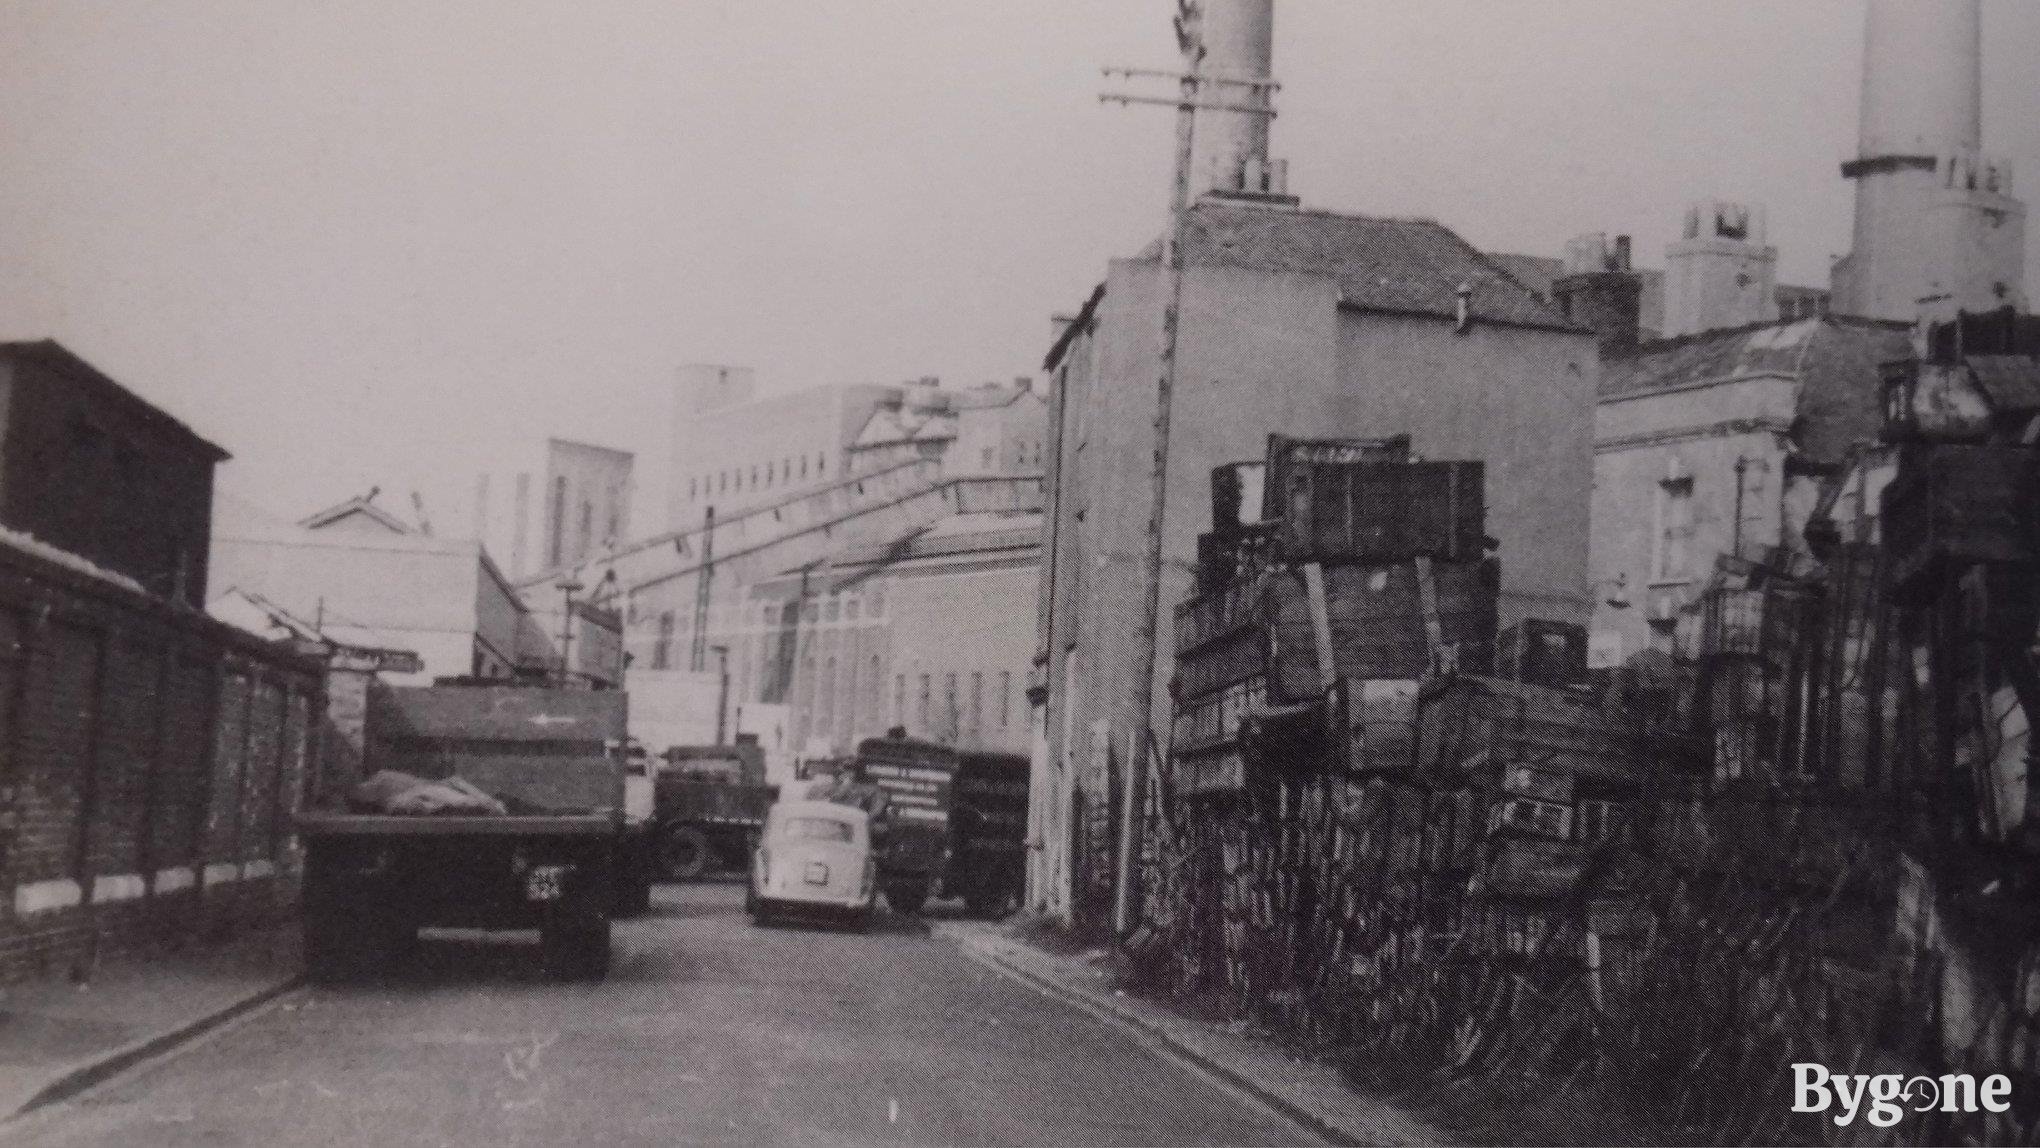 White Hart Road 1950s